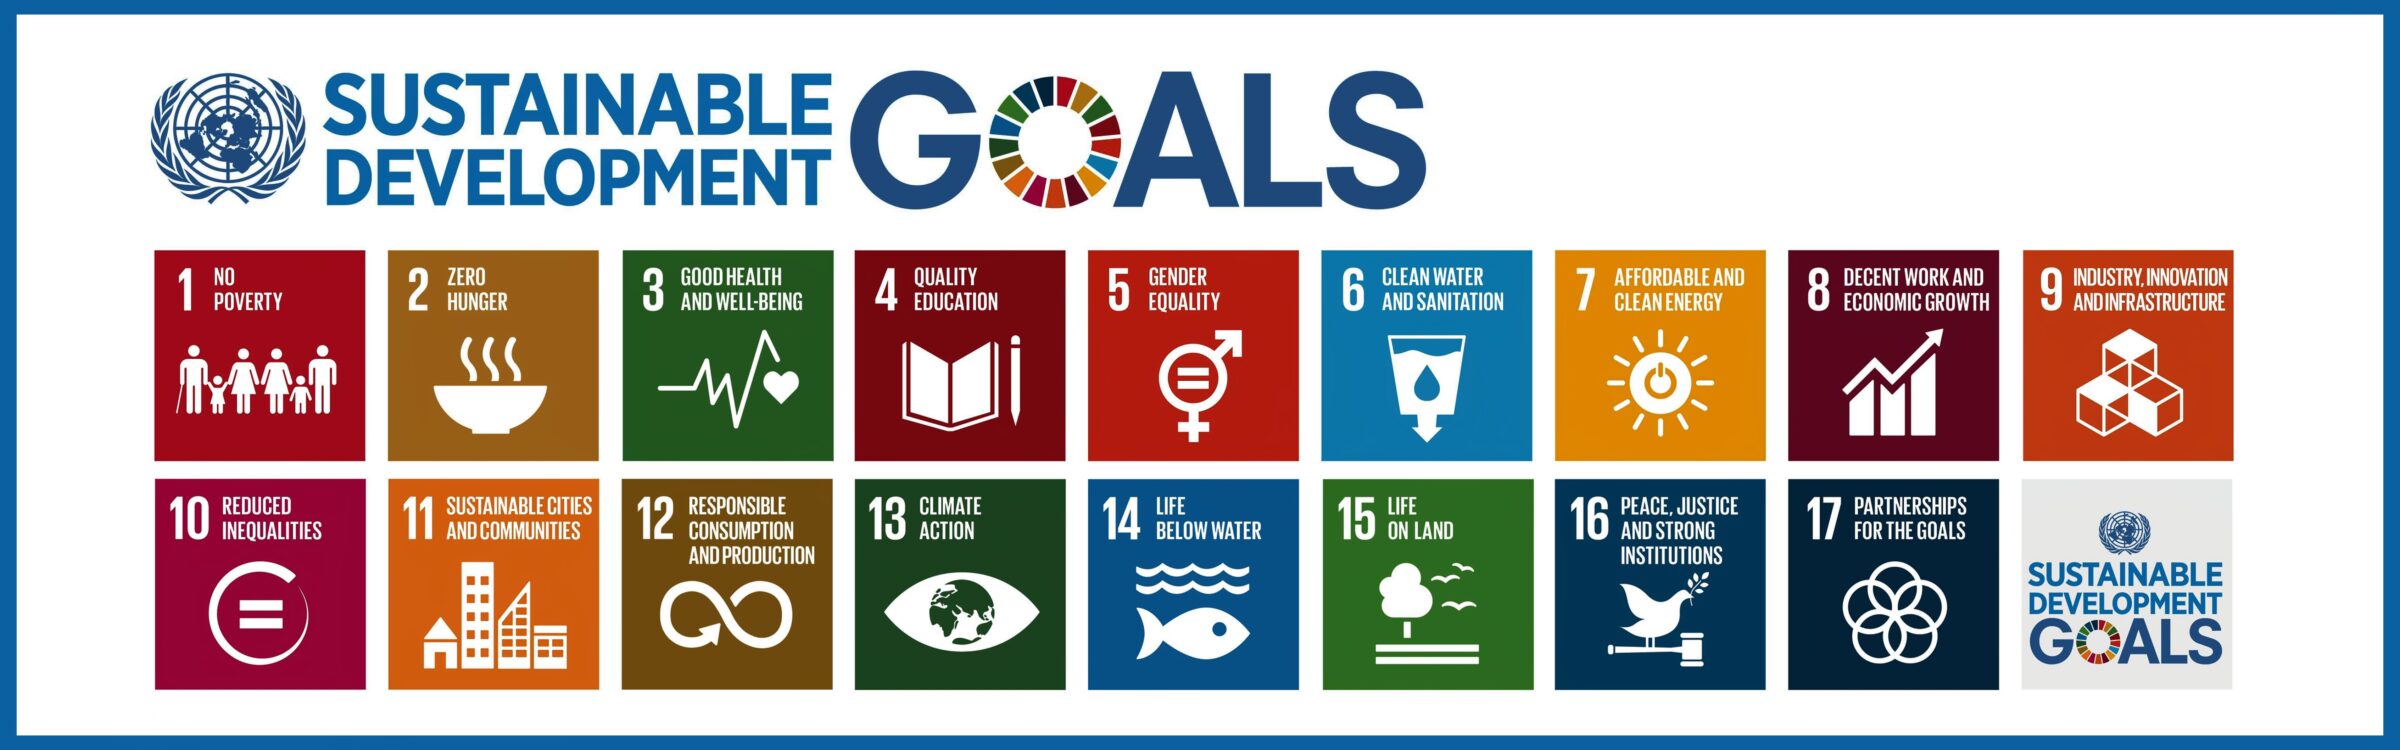 UN Sustainable Development Goals banner. Lists goals 1 to 17